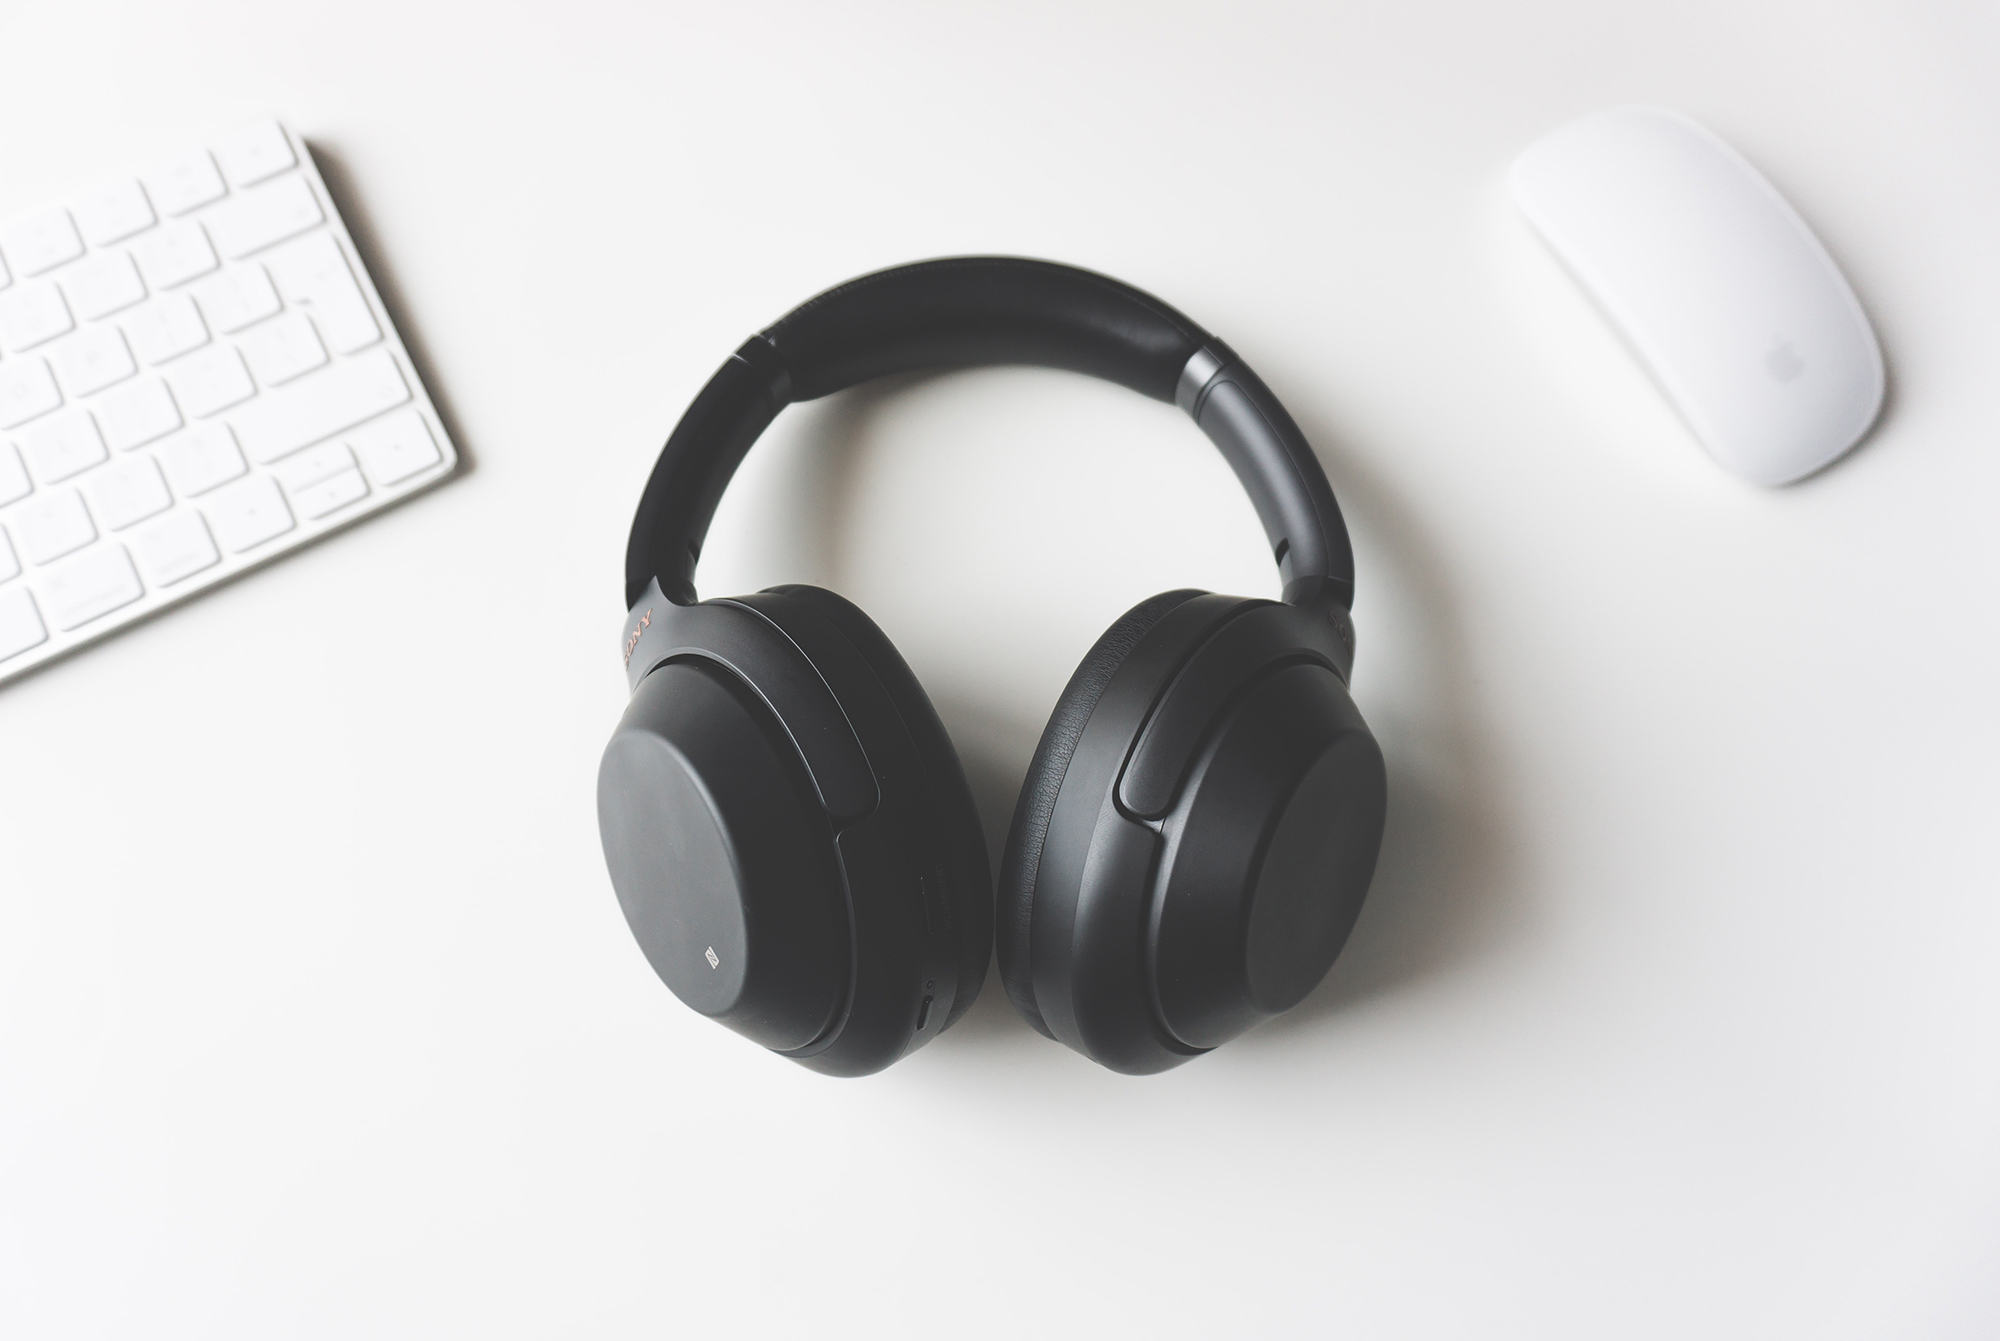 Best wireless headphones for everyday listening